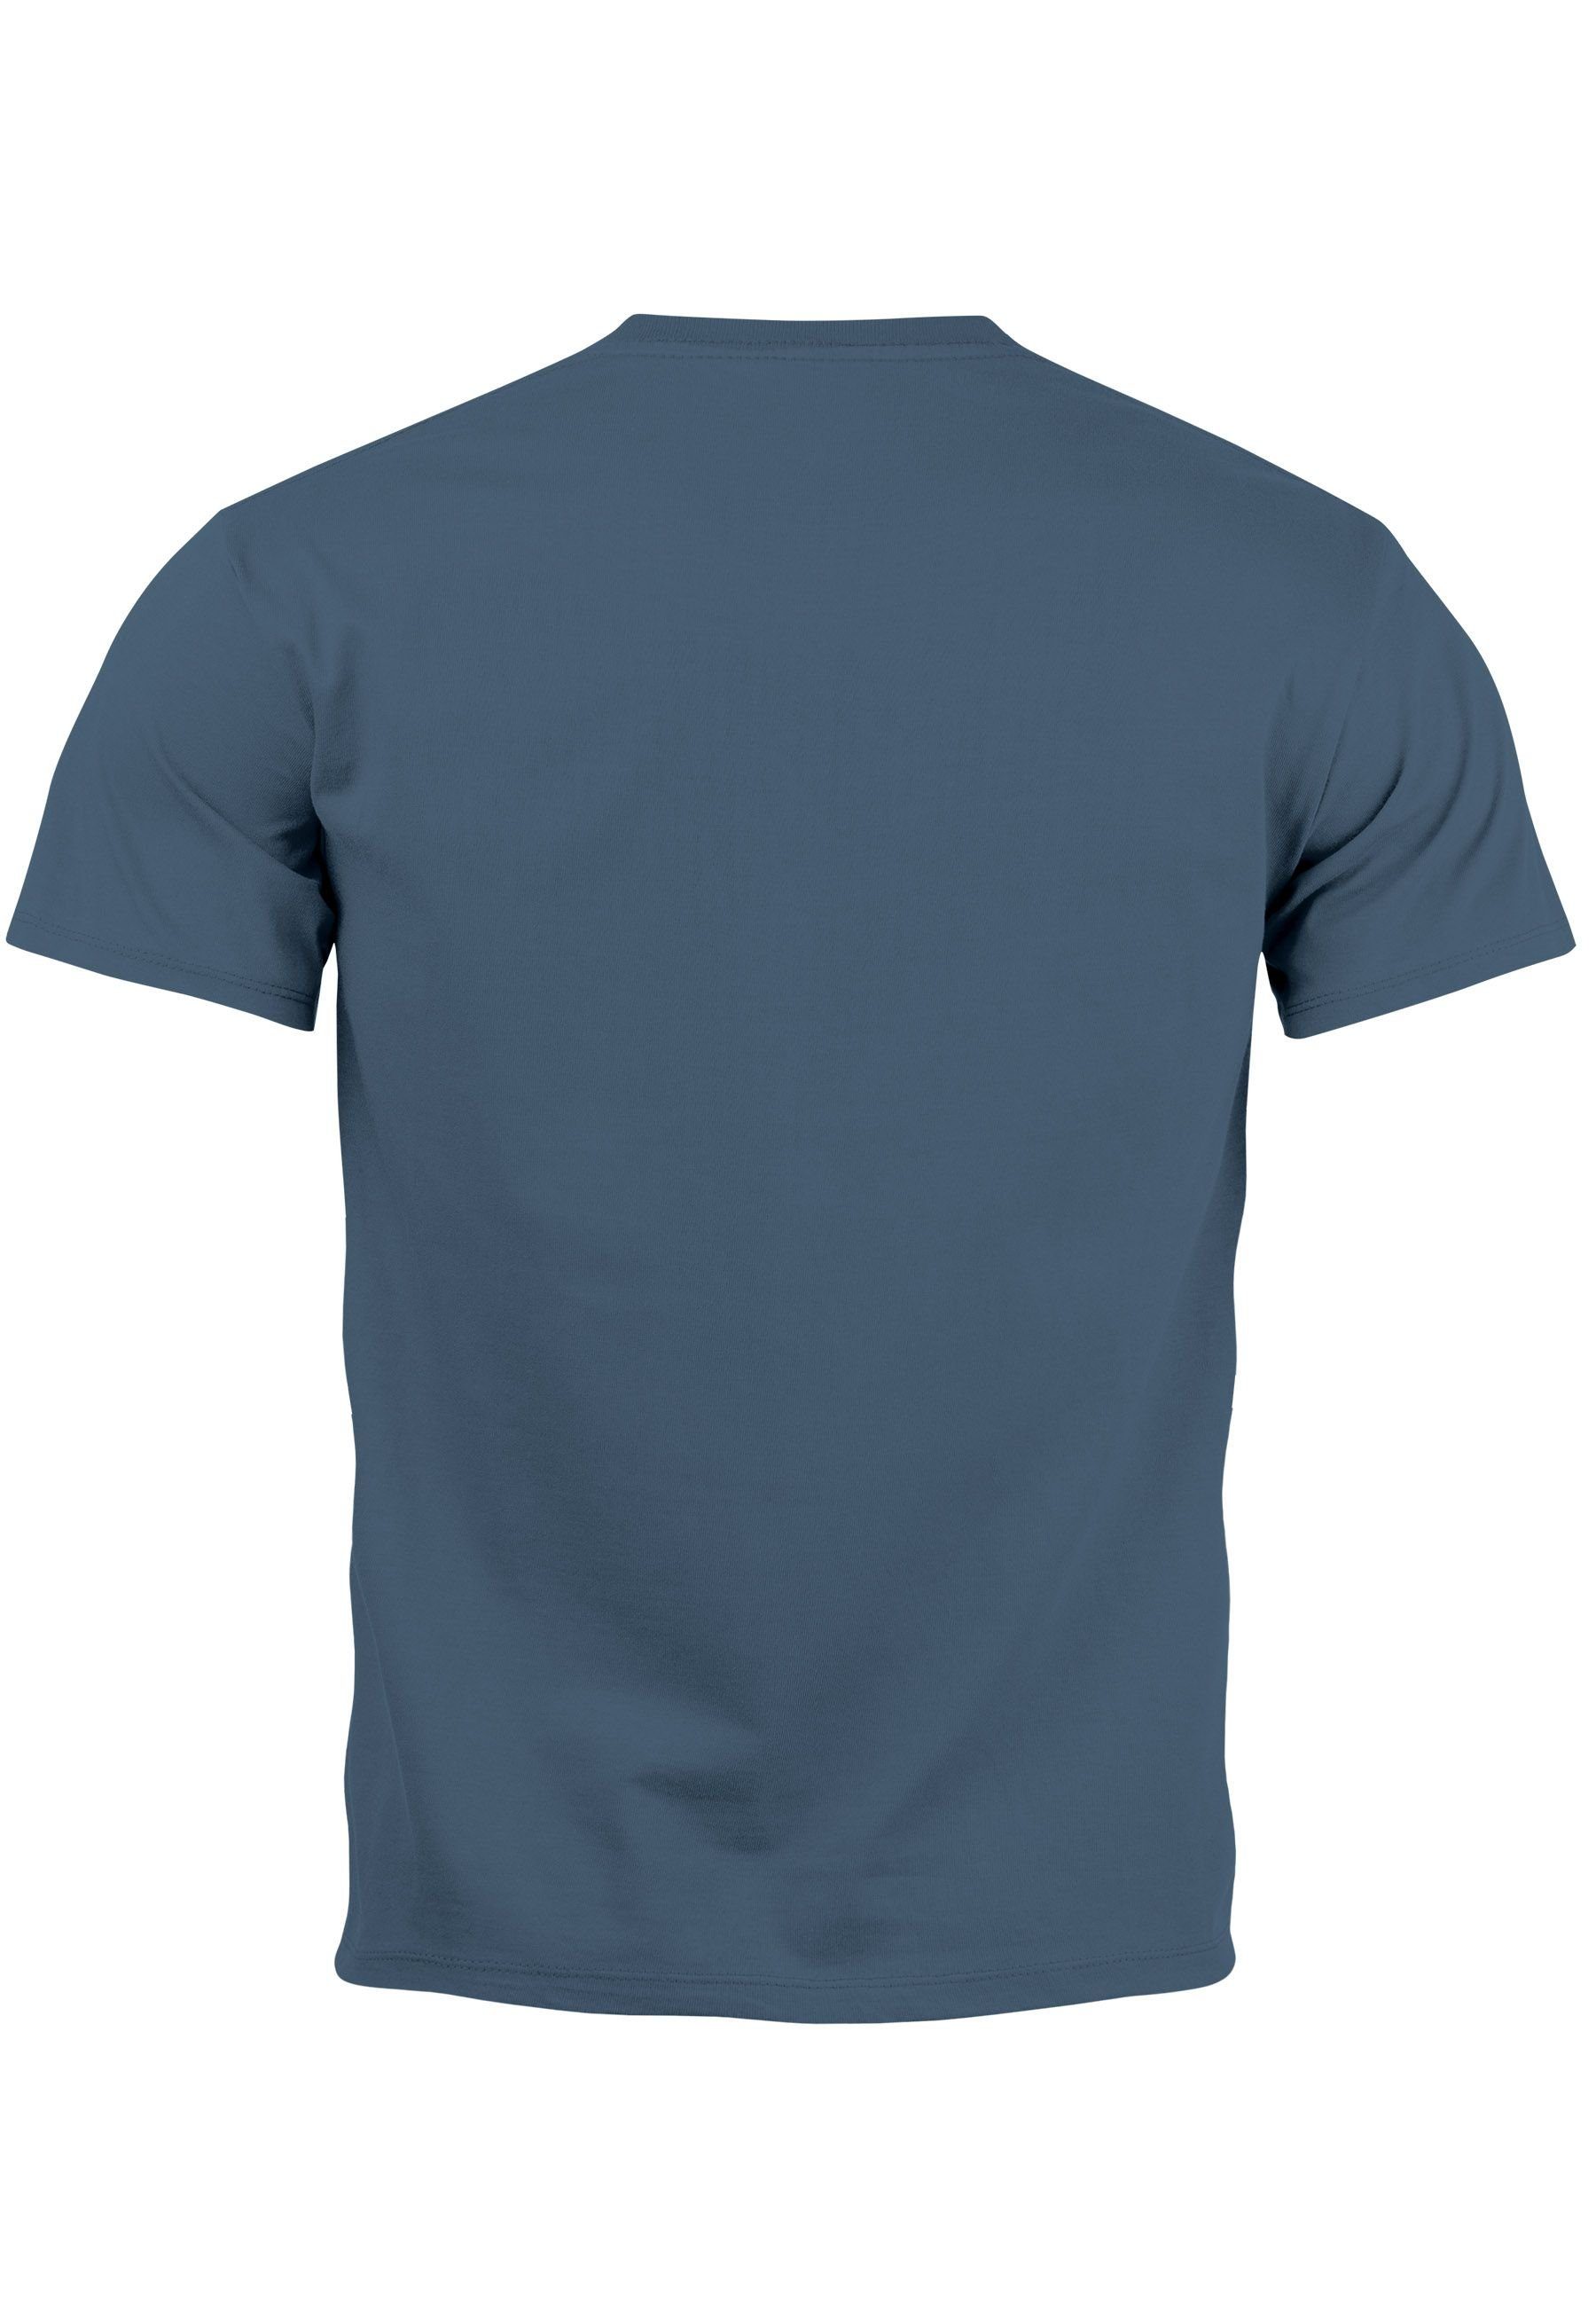 Neverless Print-Shirt Bedruckt Miami blue T-Shirt Motiv Print Surfing Herren USA denim mit Automobil Beach Retro